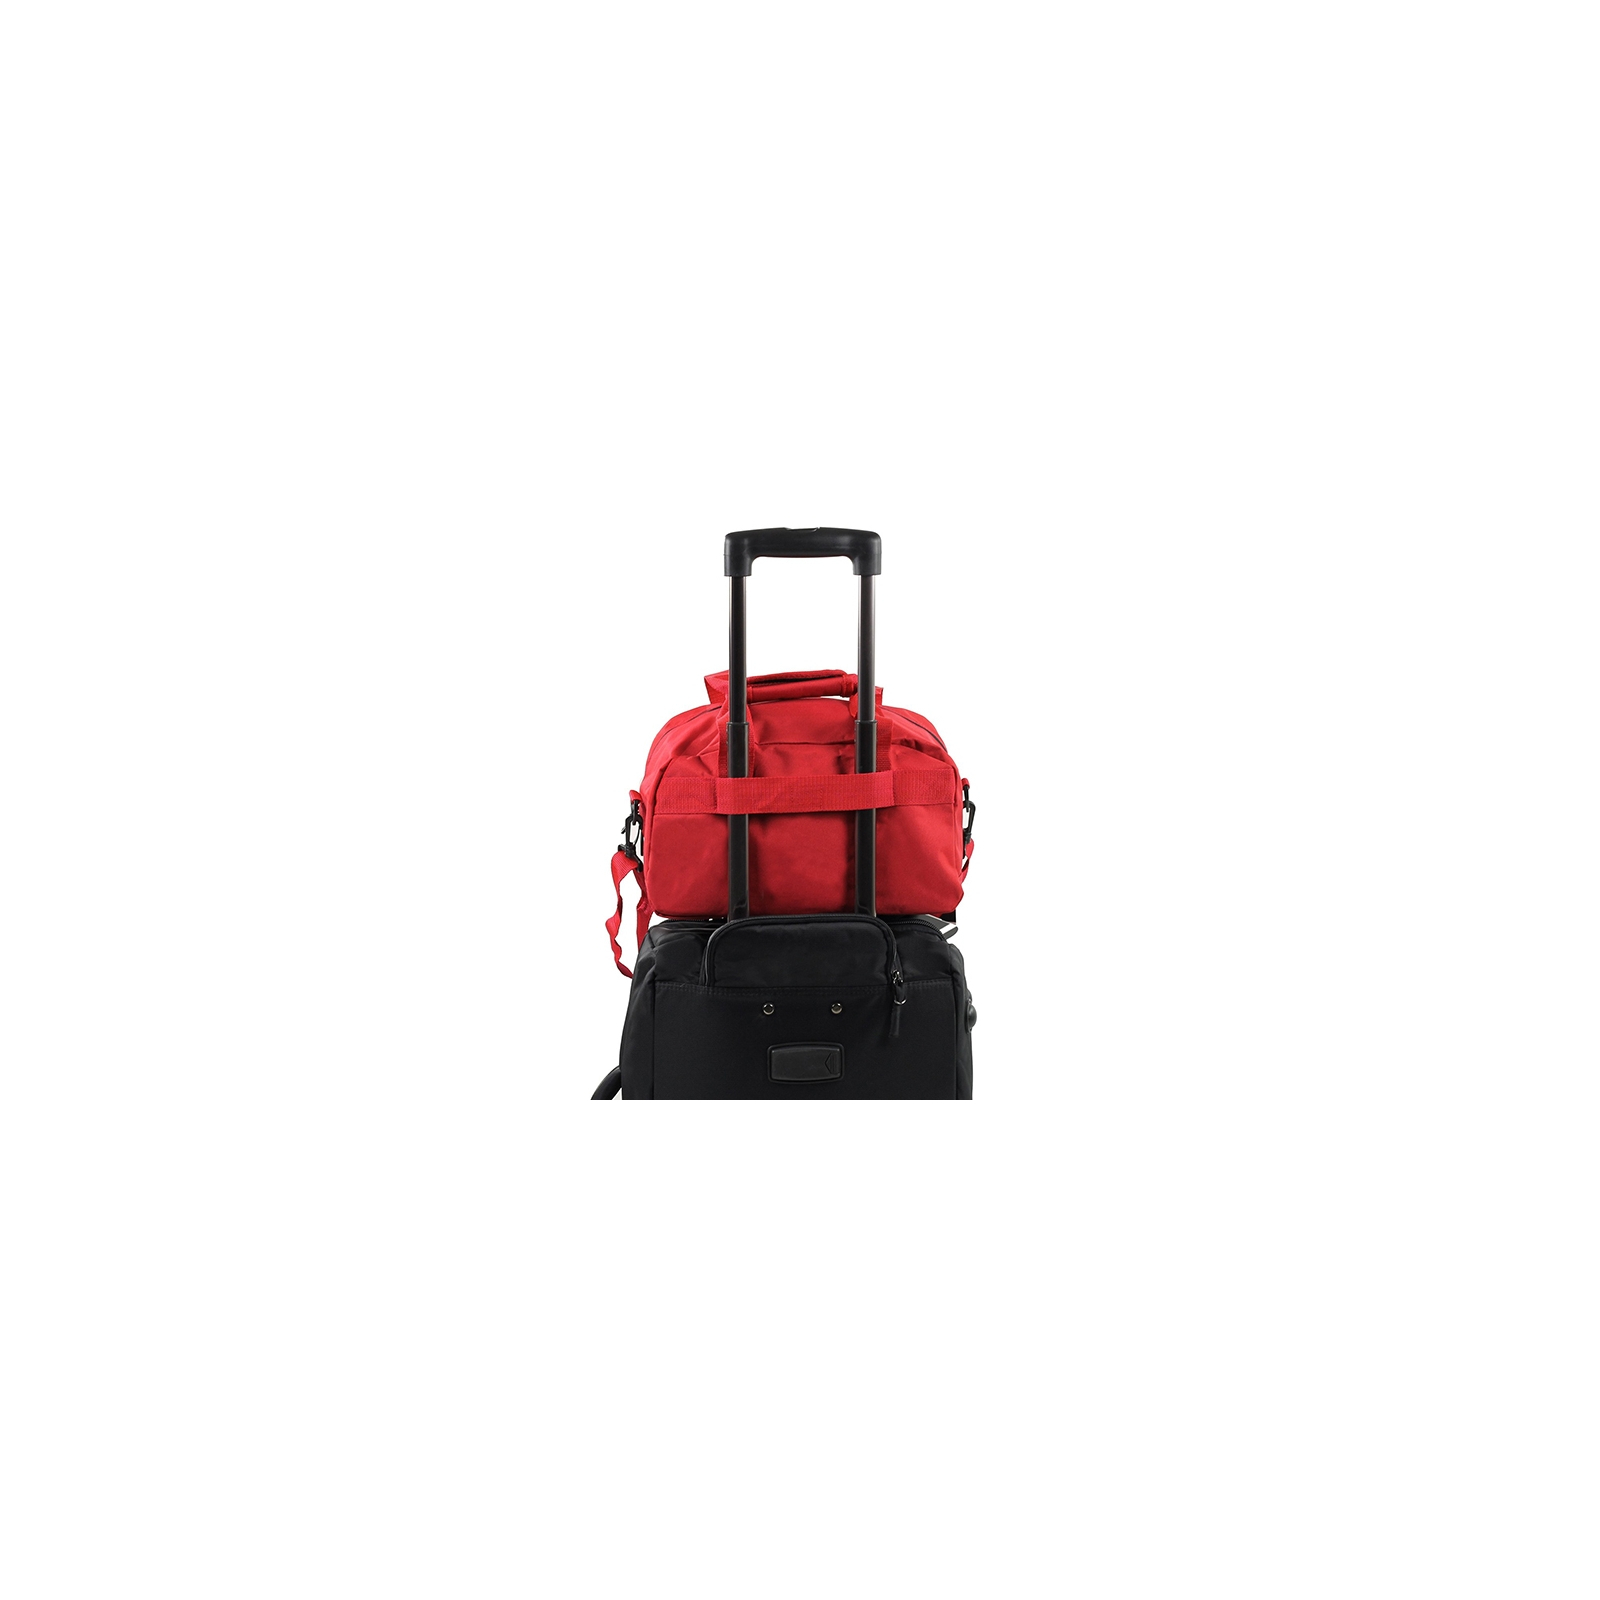 Сумка дорожная Members Essential On-Board Travel Bag 12.5 Red (SB-0043-RE) изображение 2